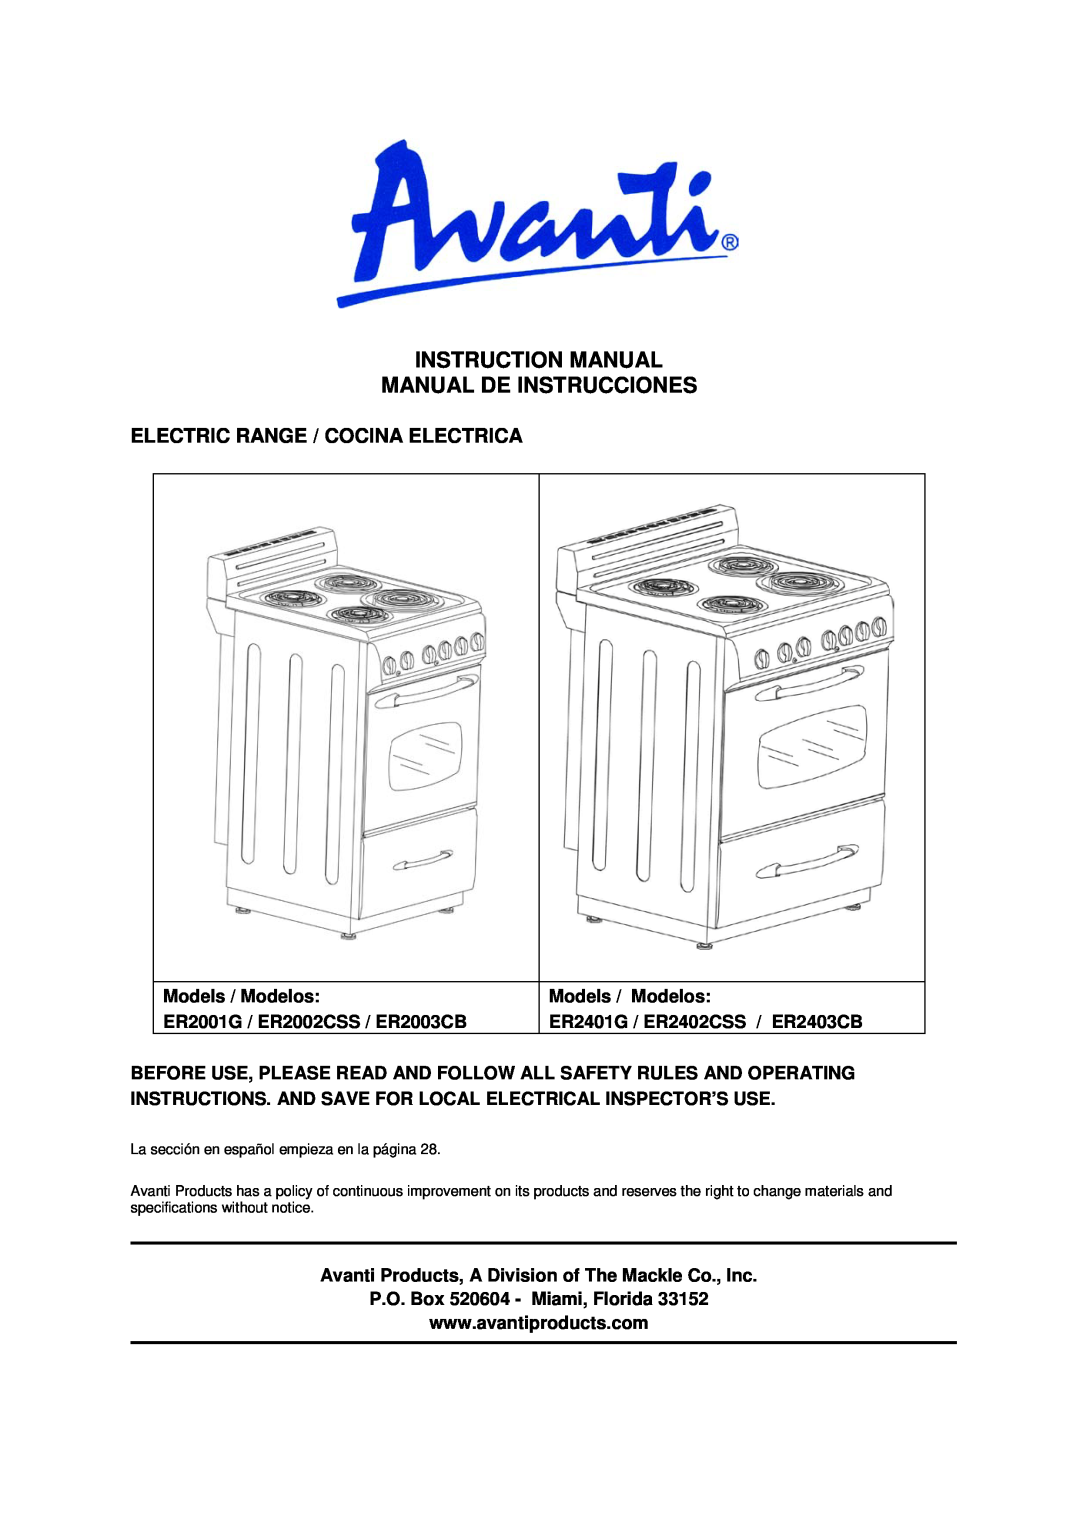 Avanti ER2401G instruction manual Picture May Vary, Electric Range Cocina Electrica, P.O. Box 520604 - Miami, Florida 